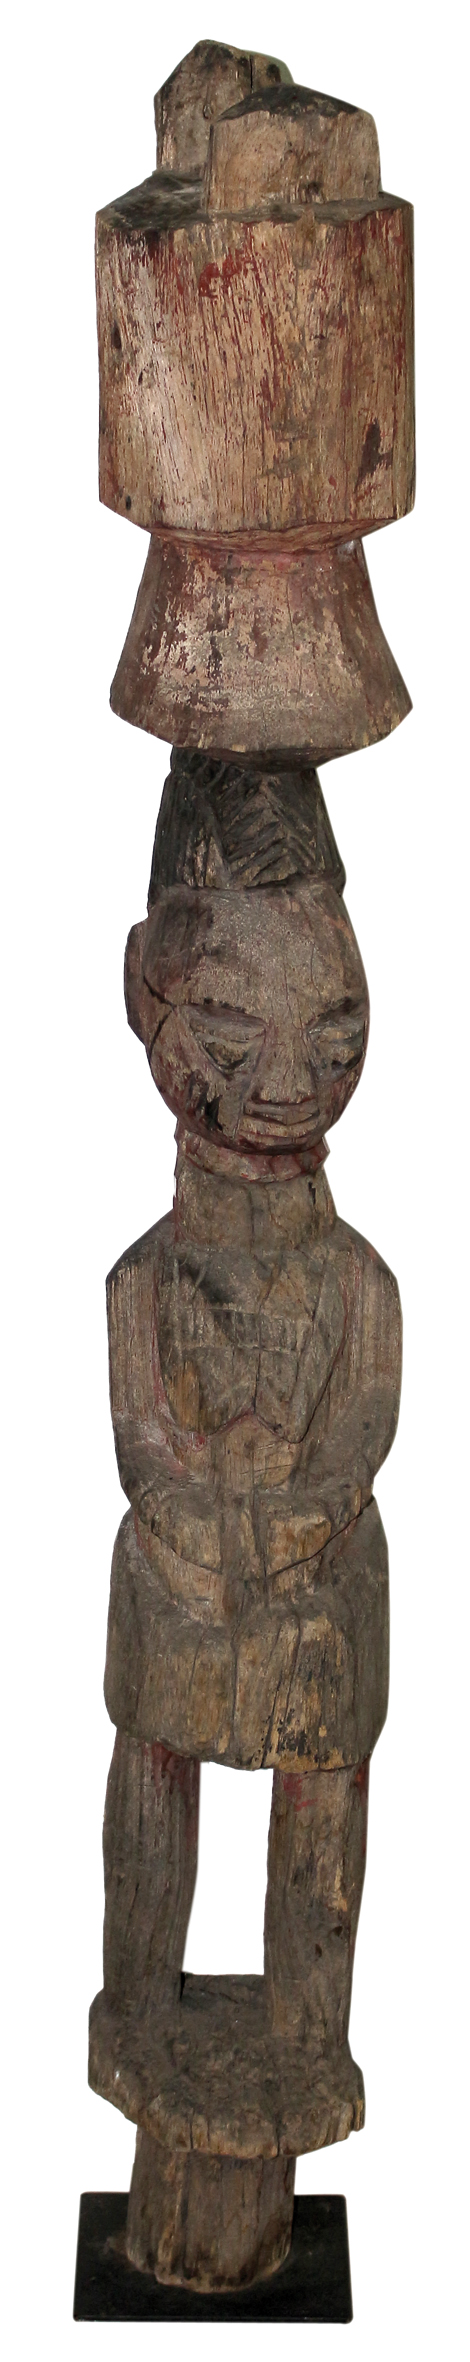 Yoruba Nigeria Pfostenfigur | Bild Nr.1